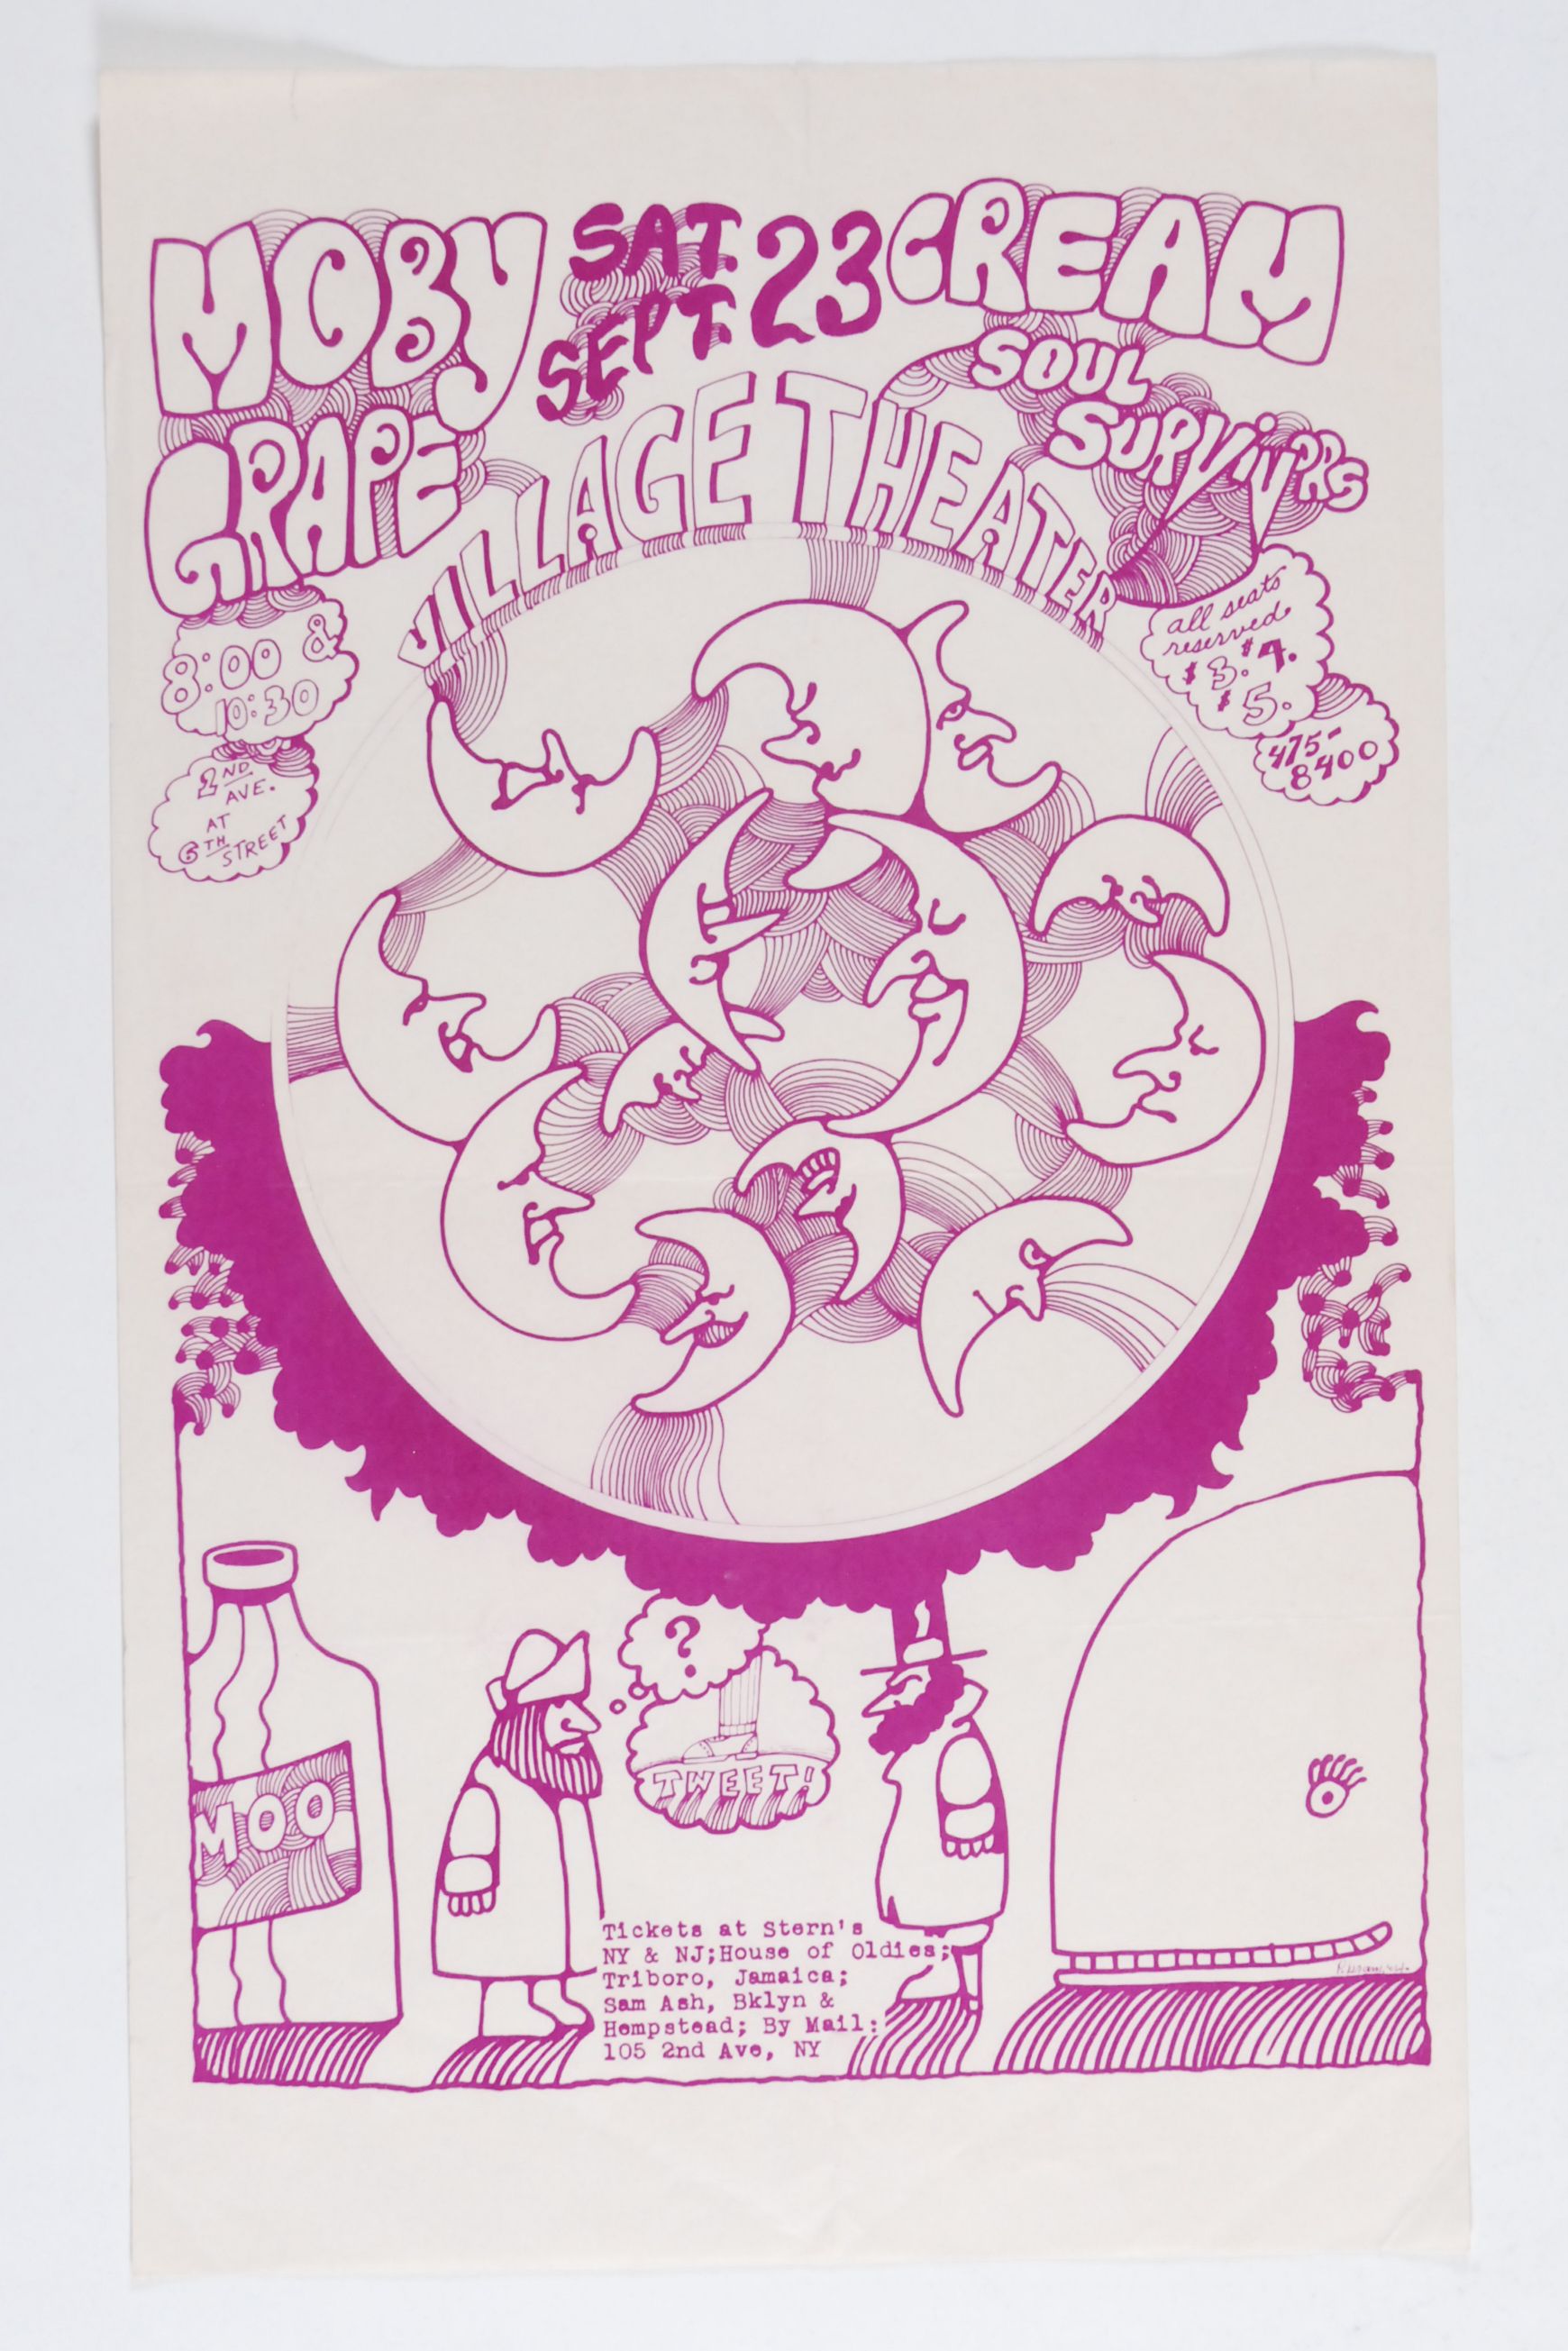 Moby Grape / Cream at Village Theatre 1967 Concert Poster